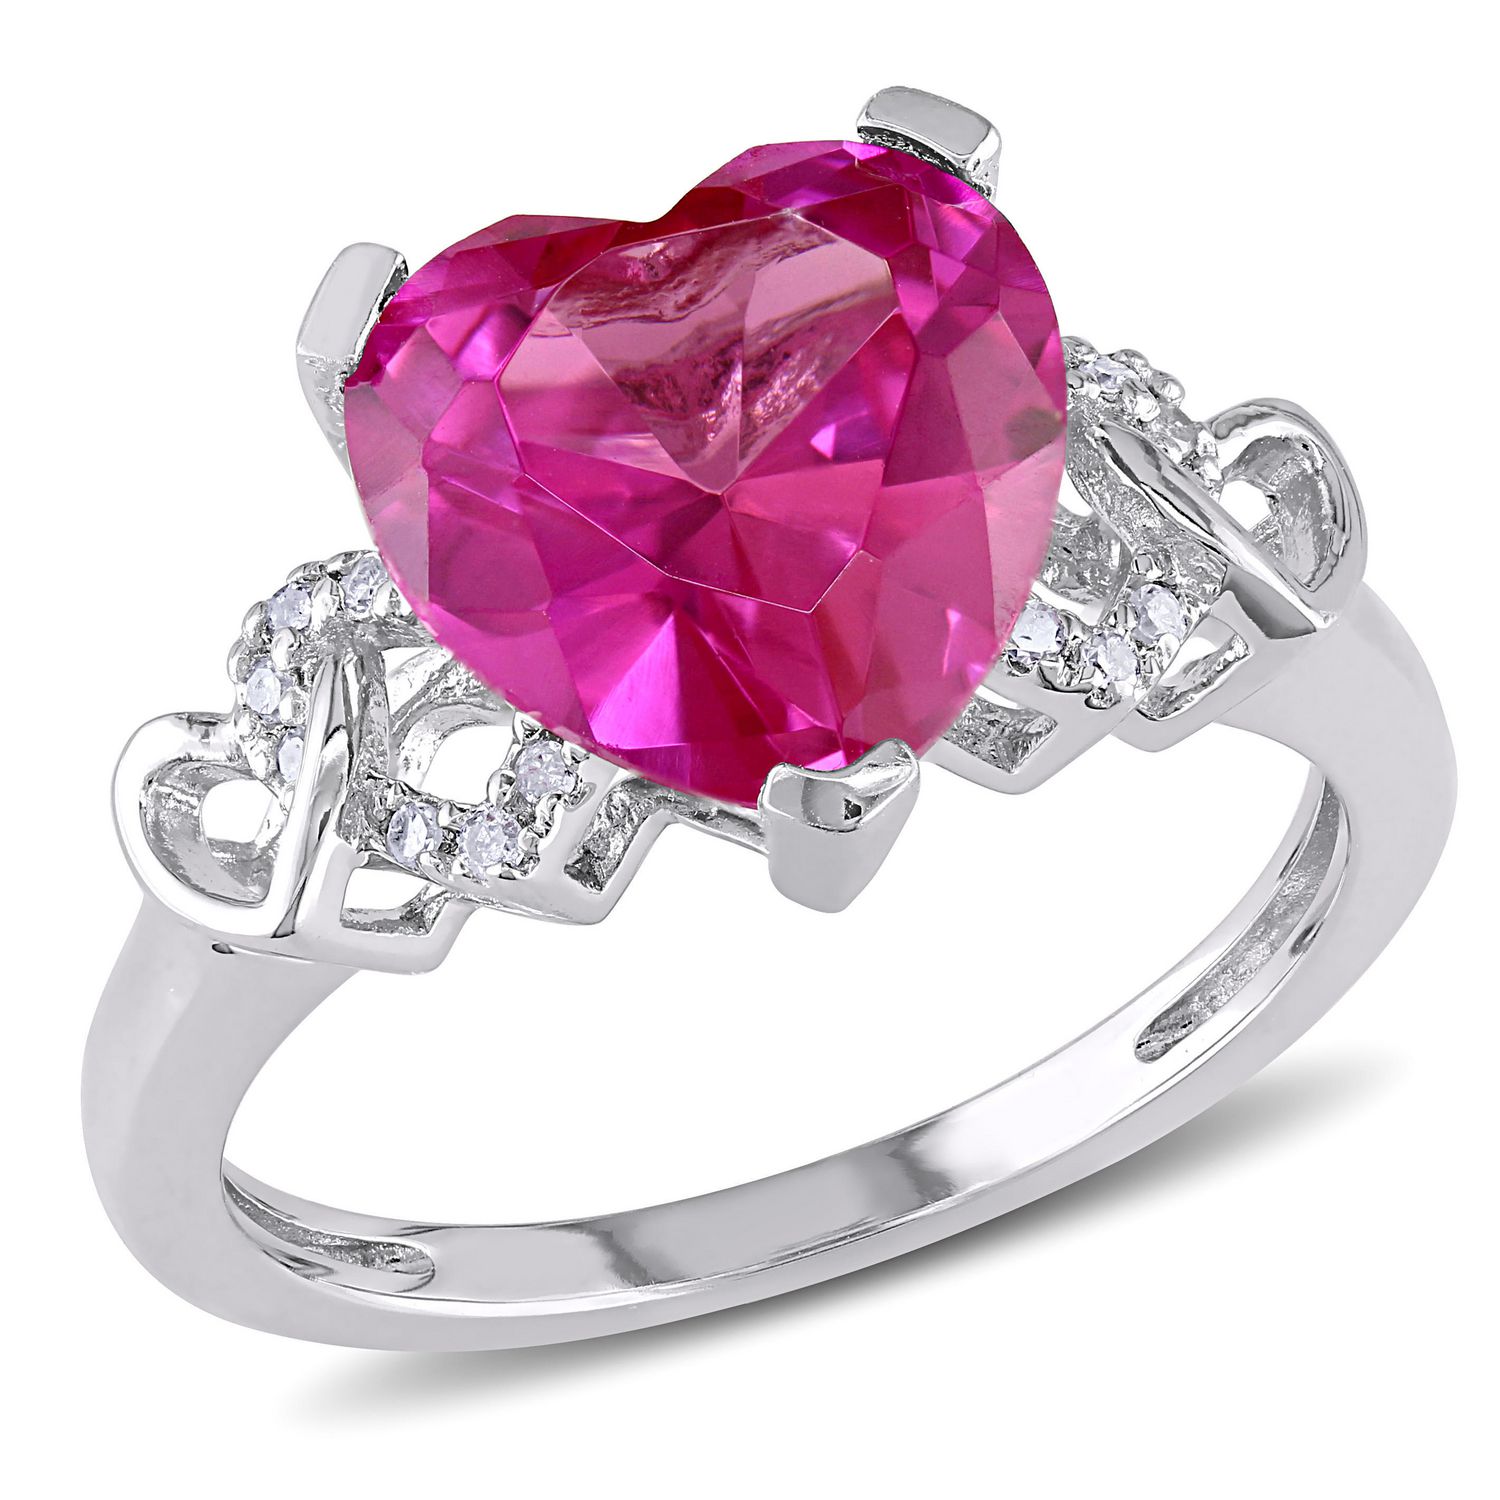 pink sapphire jewelry